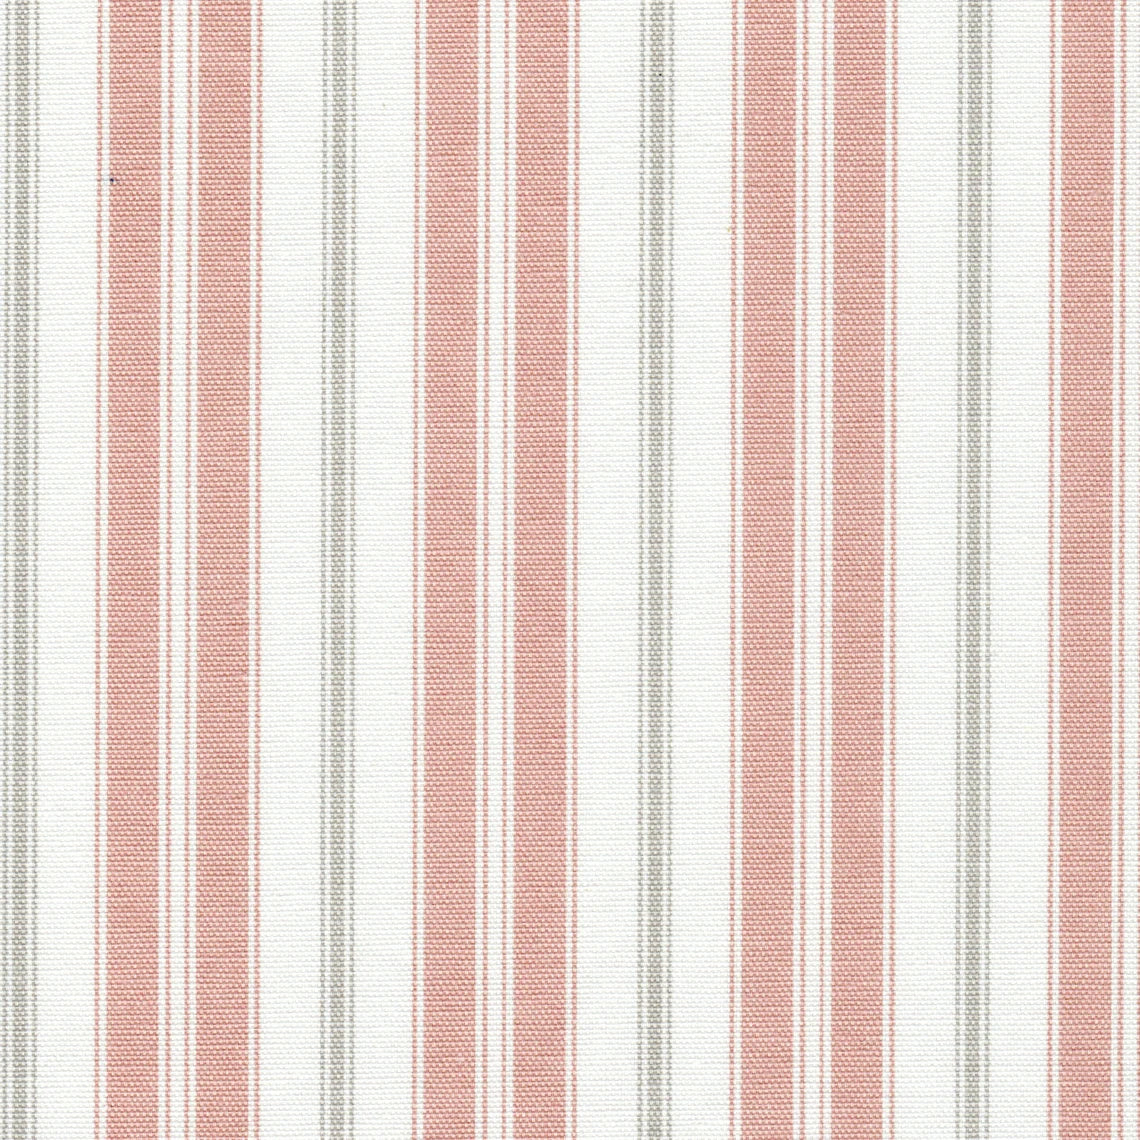 pinch pleated curtain panels pair in newbury blush stripe- pink, gray, white